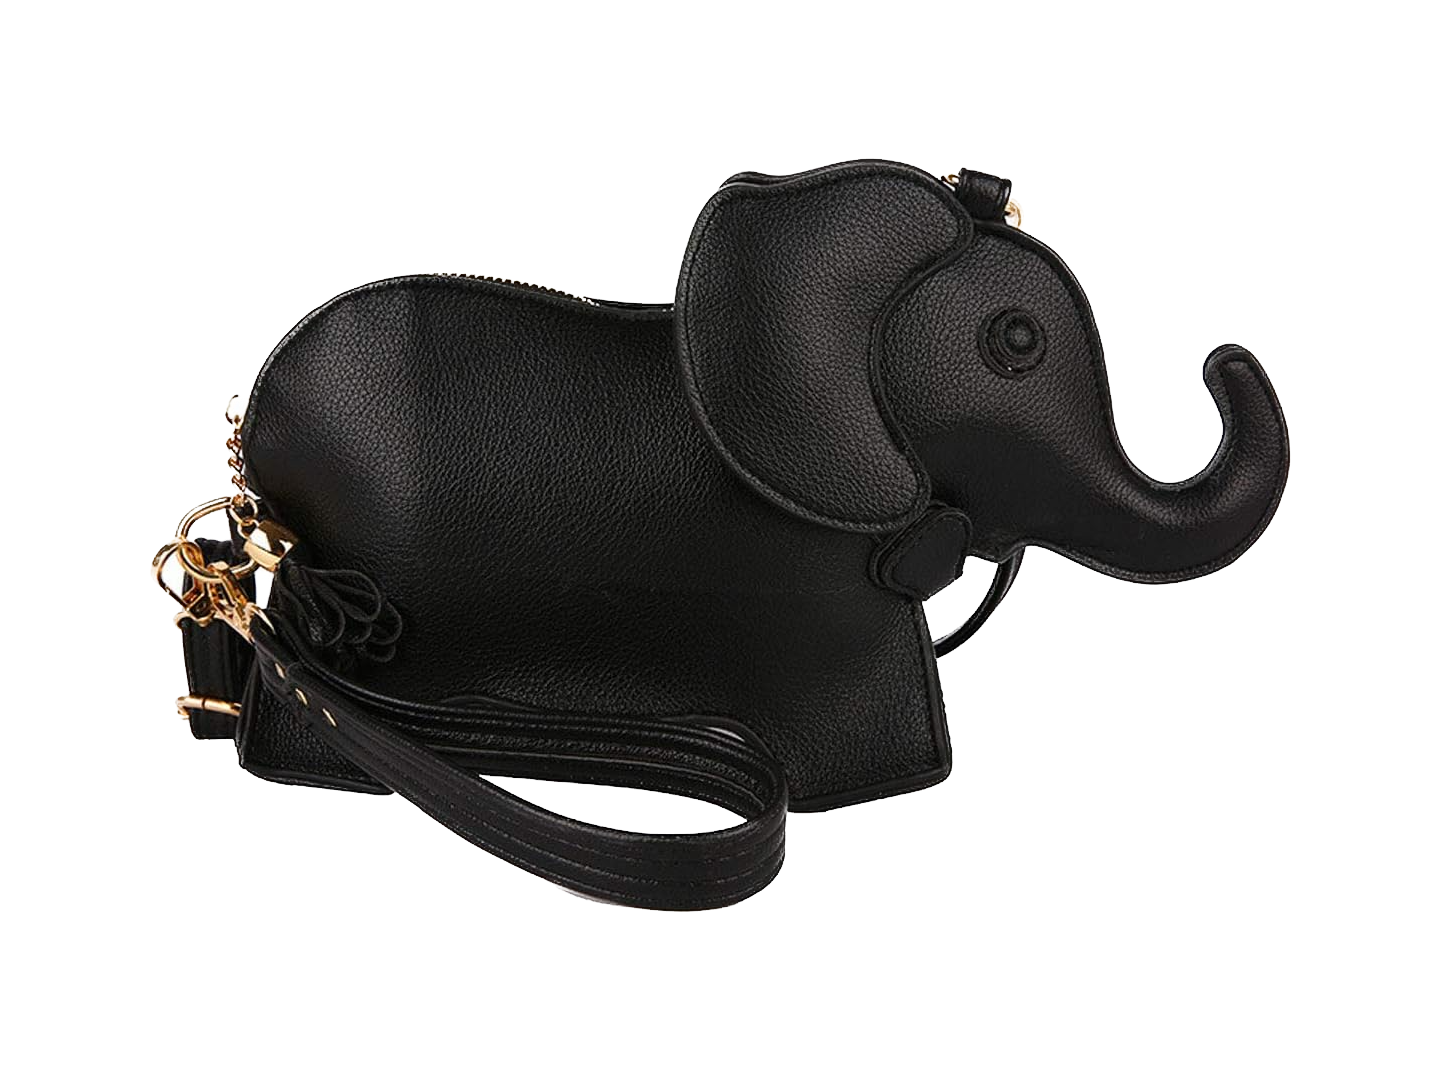 Delta Bag - Elephant Purse